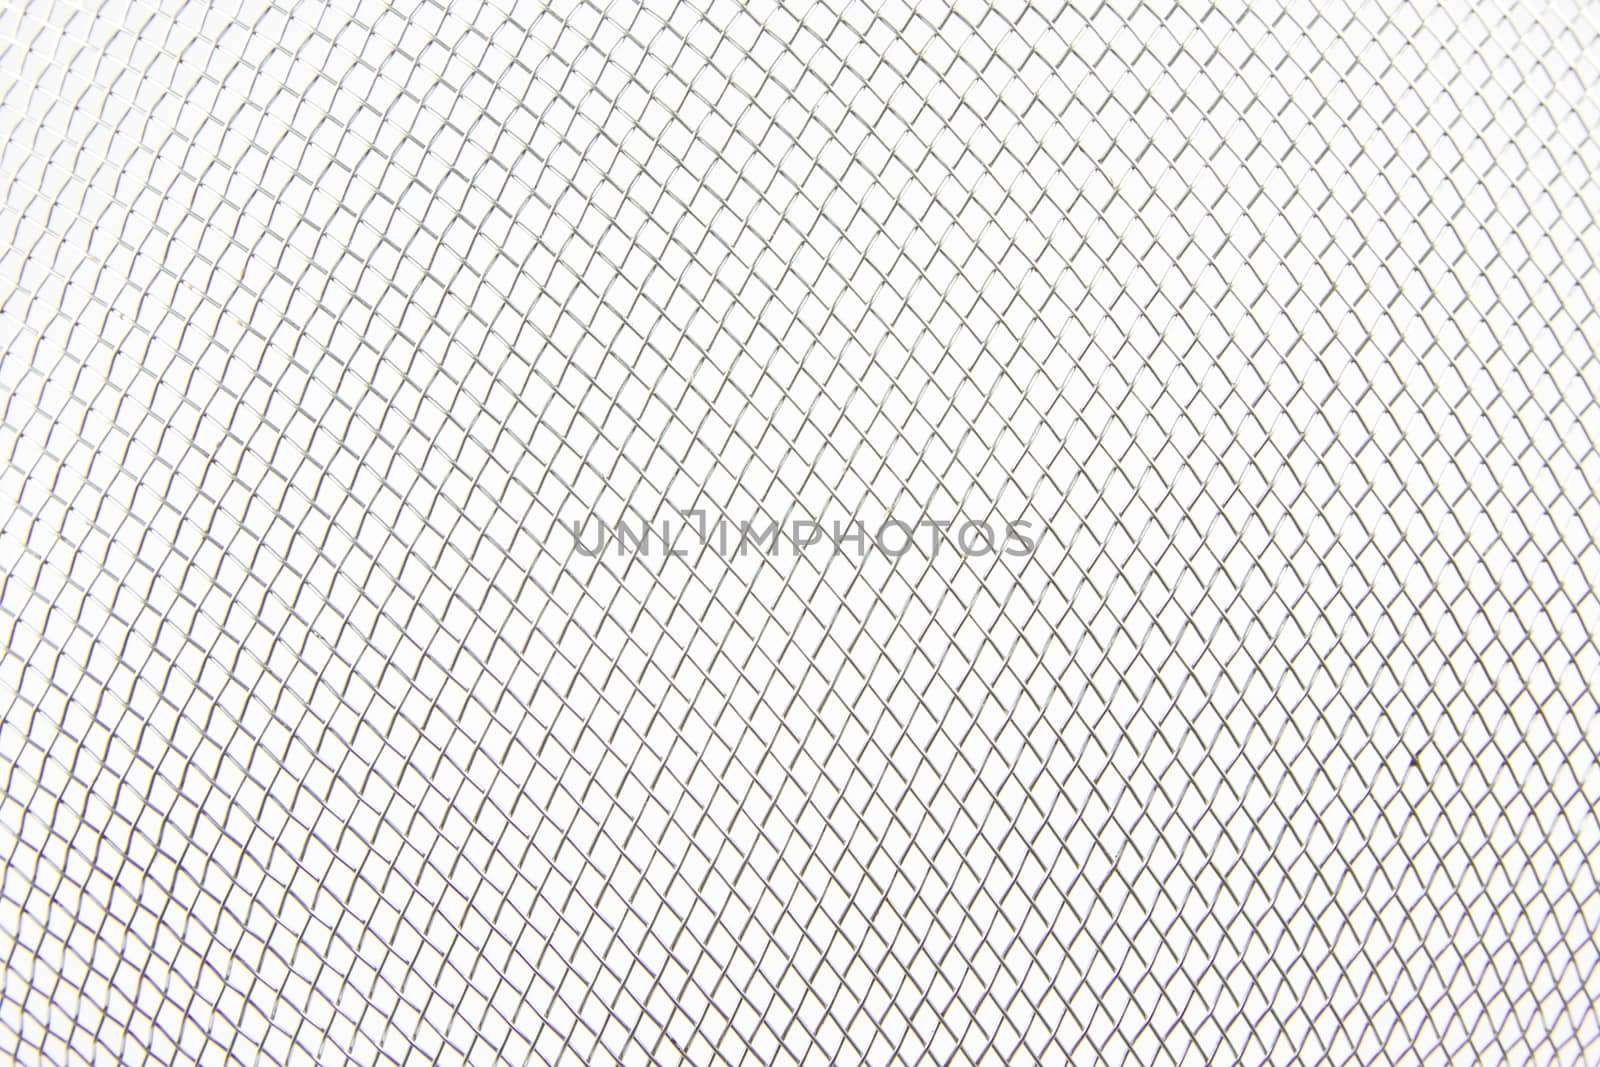 Metal net on white background